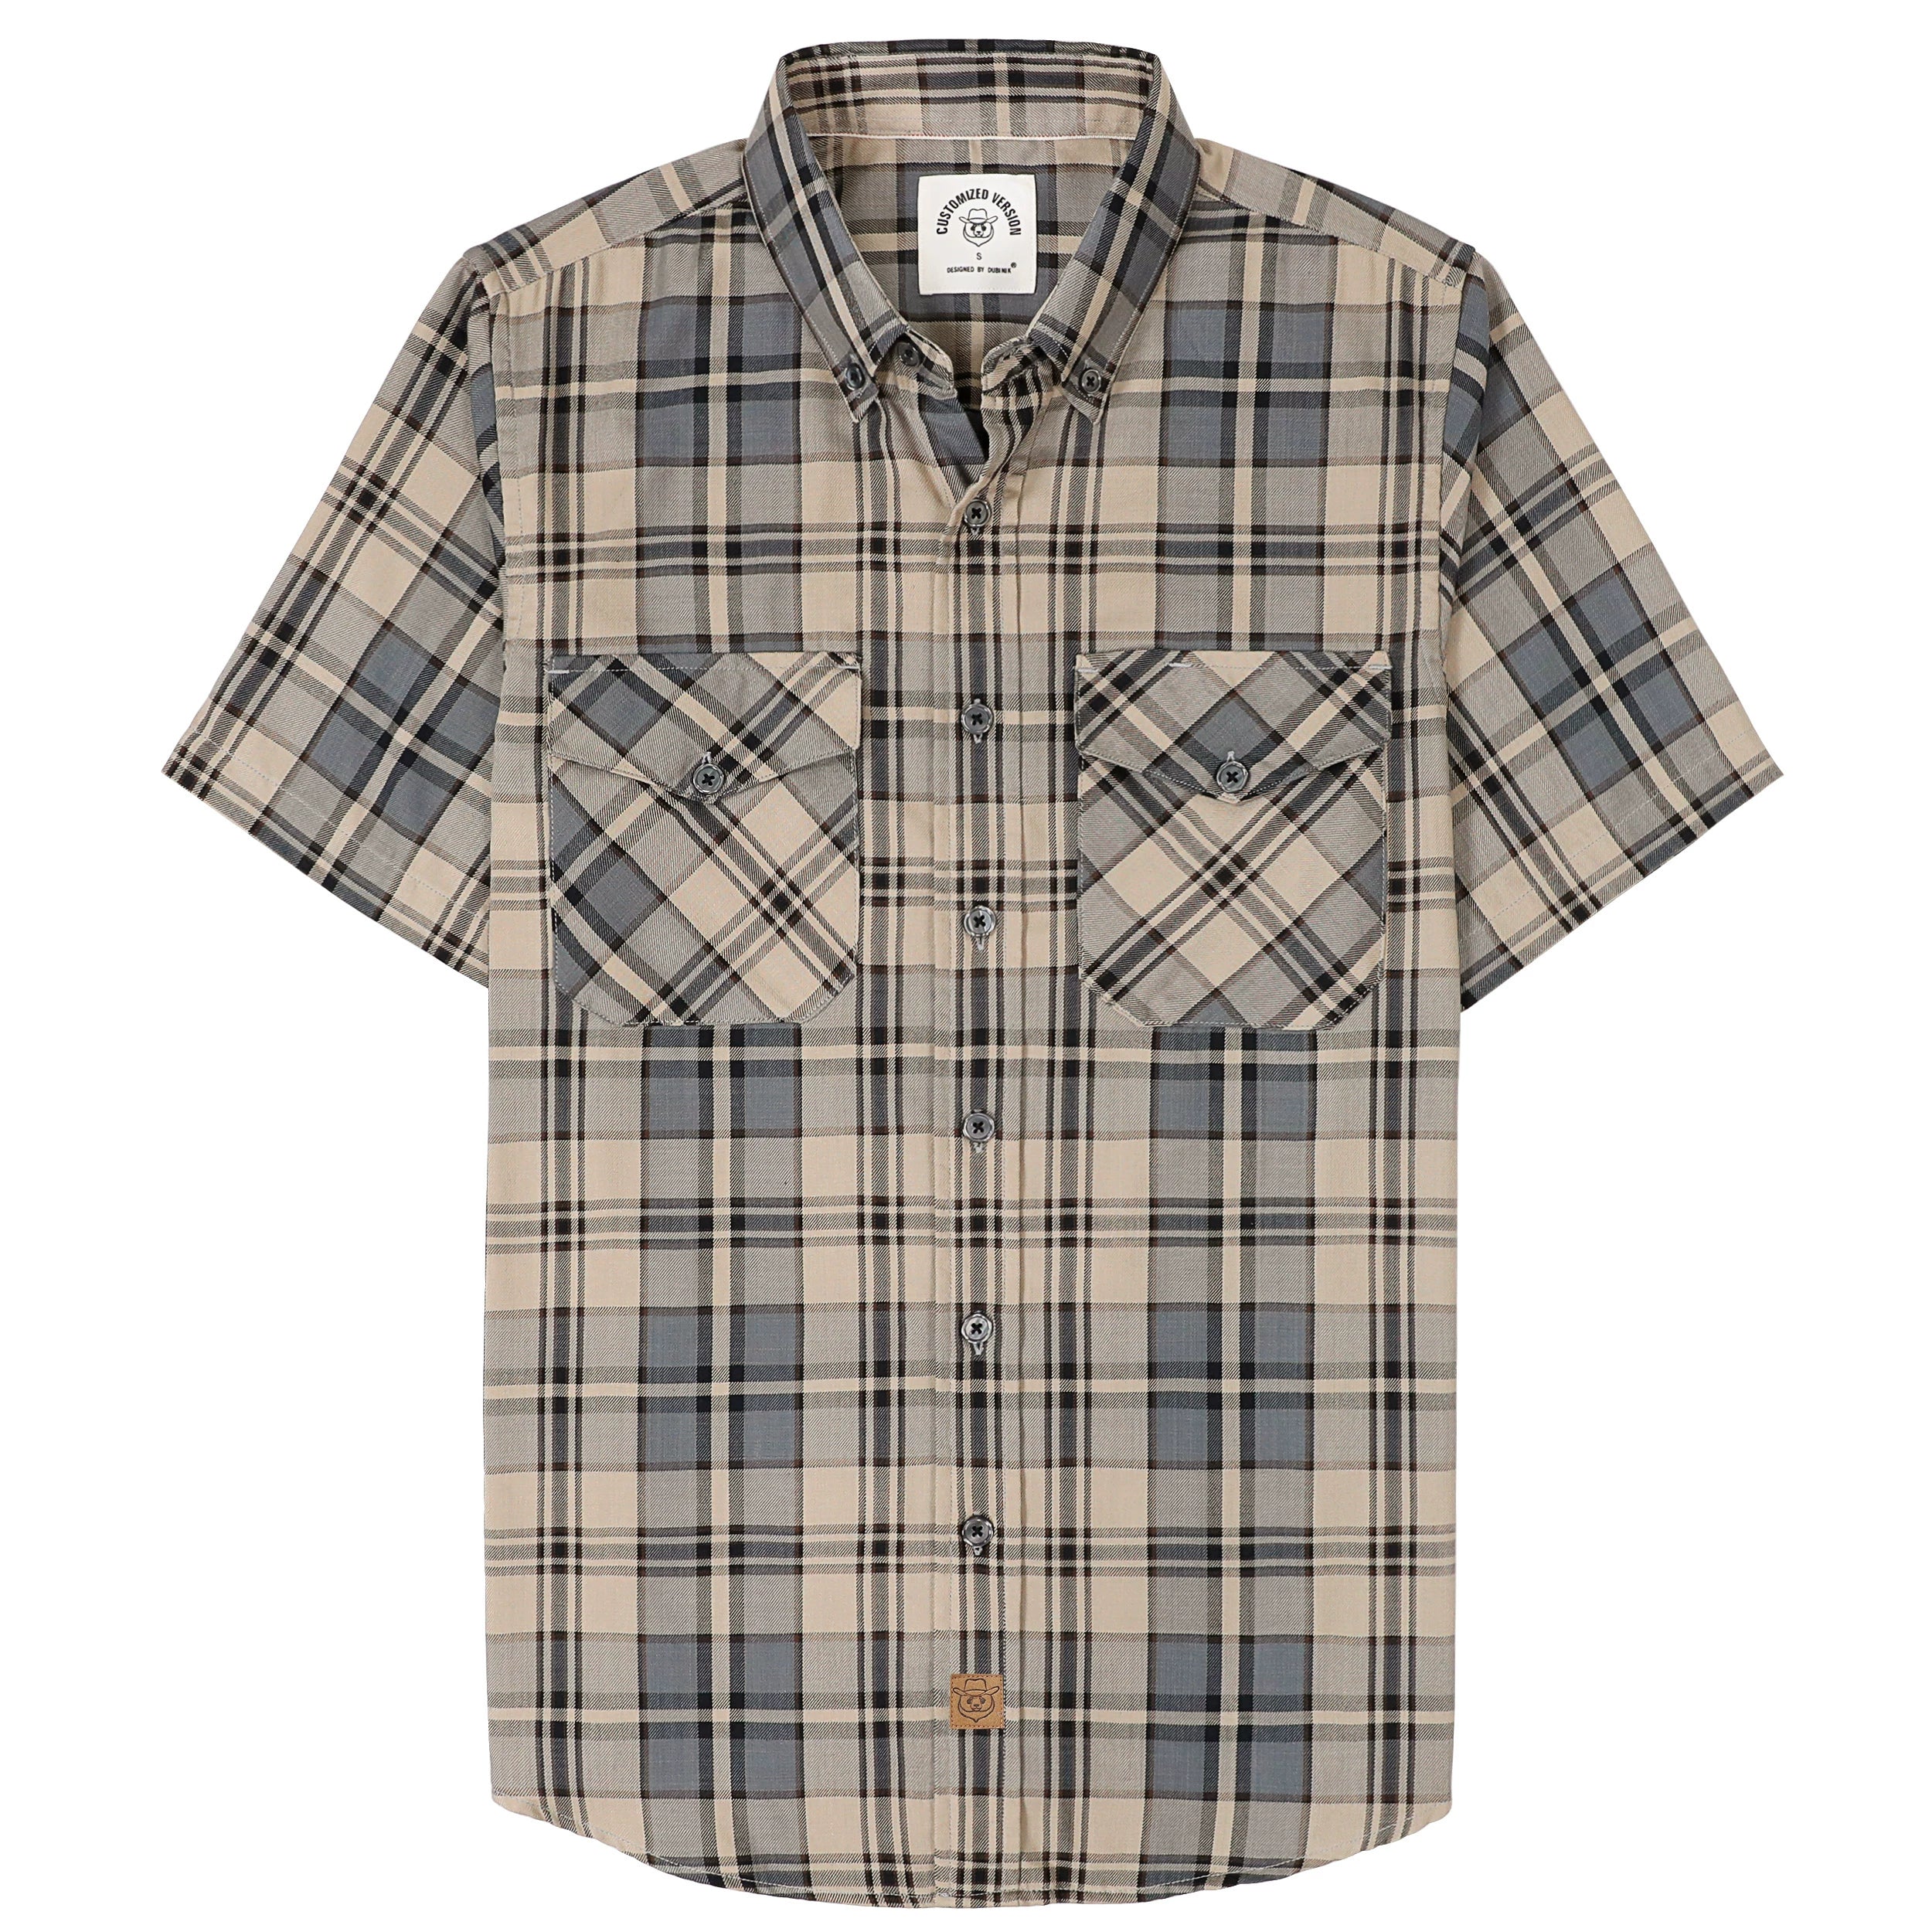 Dubinik® Bamboo Viscose Mens Short Sleeve Button Down Pockets Shirts#39901